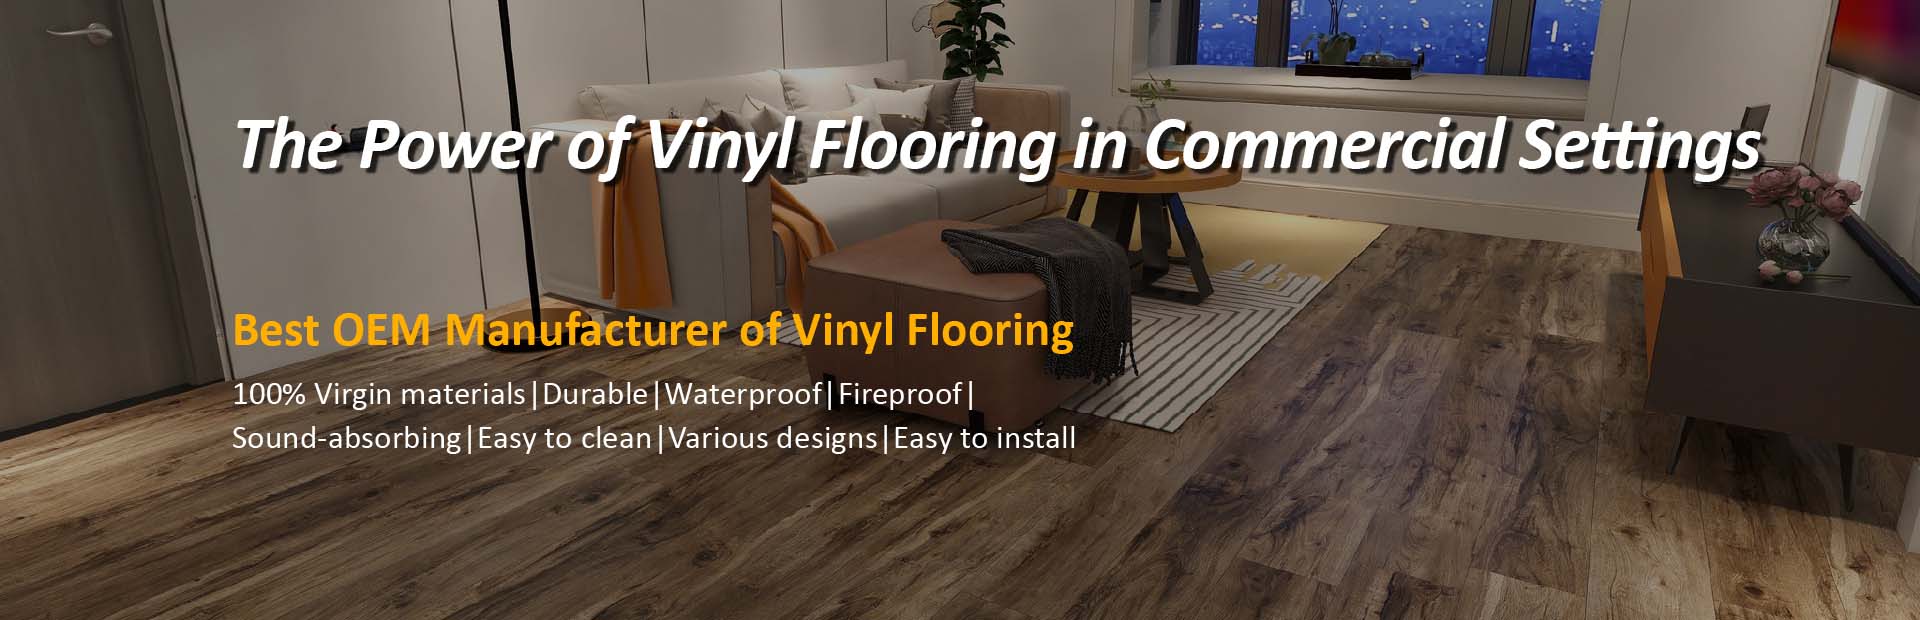 OEM Manufacturer ny Vinyl Flooring